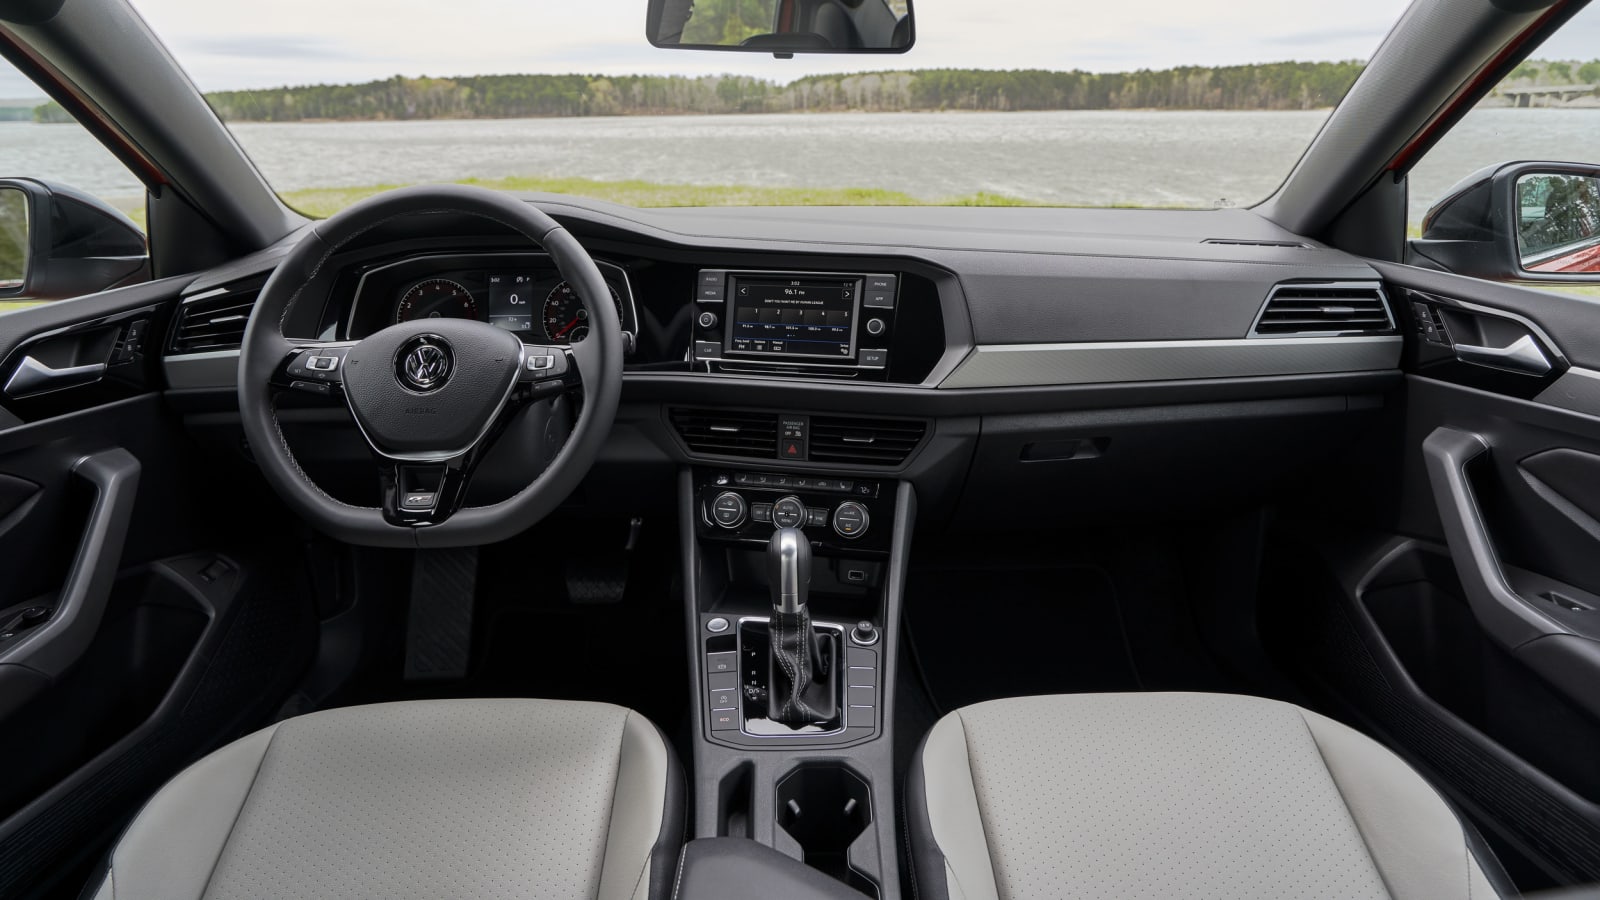 2020 Volkswagen Jetta Reviews Price Specs Features And